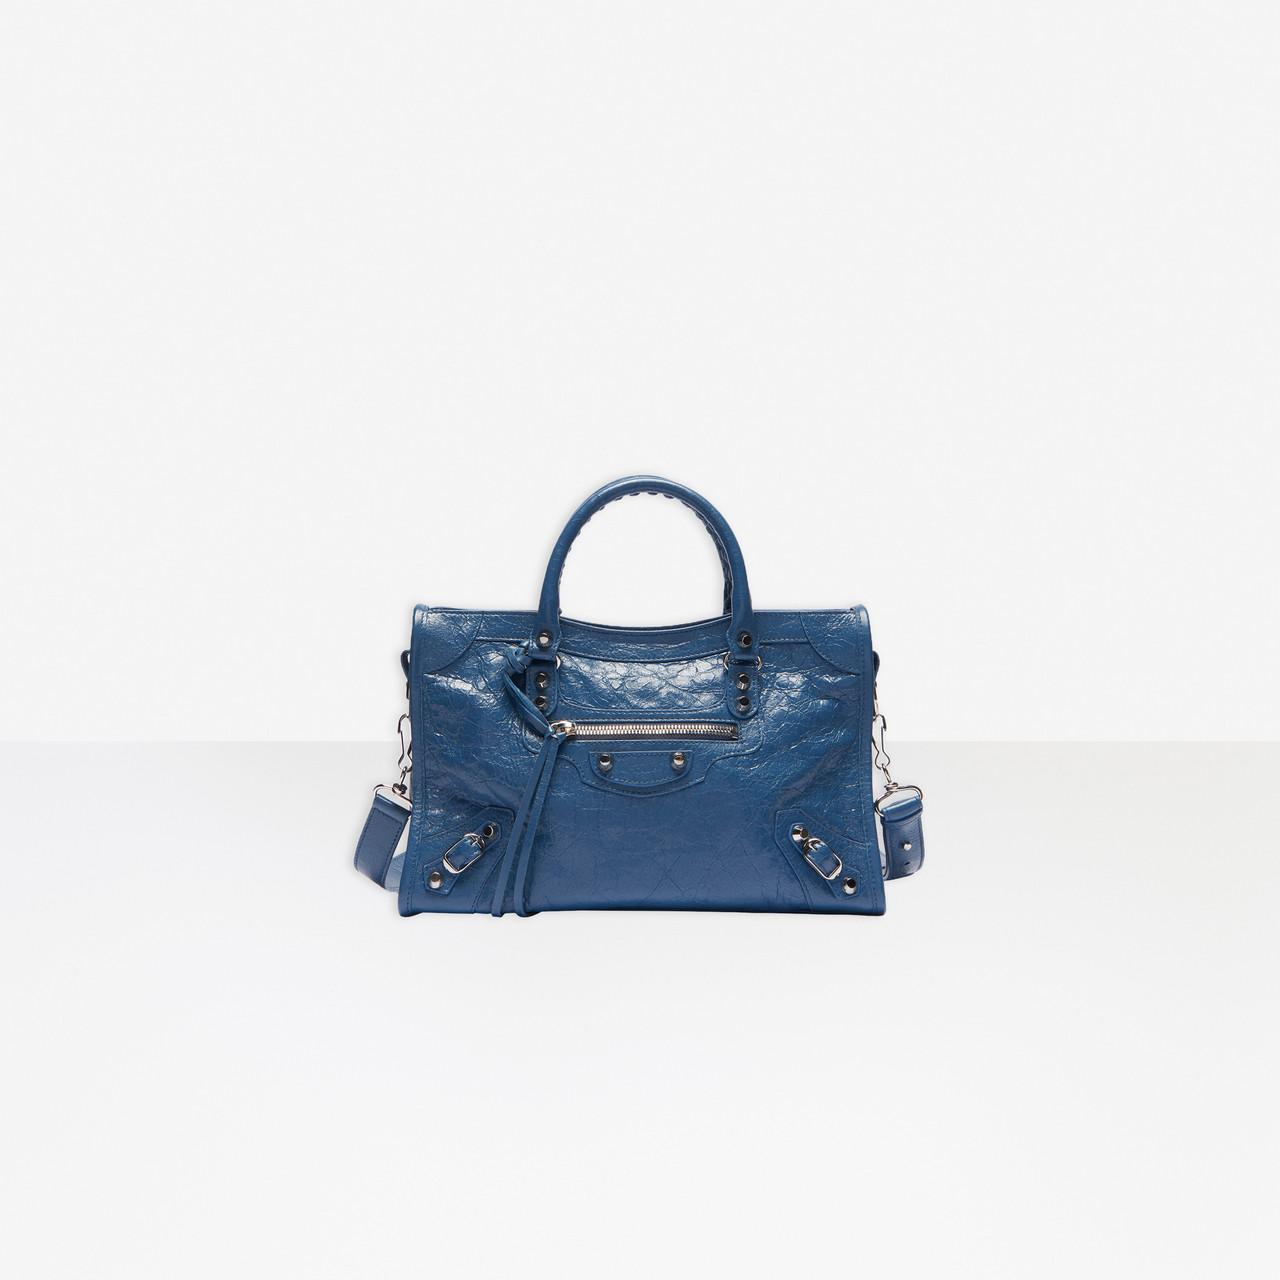 Balenciaga Leather Classic City Small Shoulder Bag in Denim Blue (Blue) |  Lyst